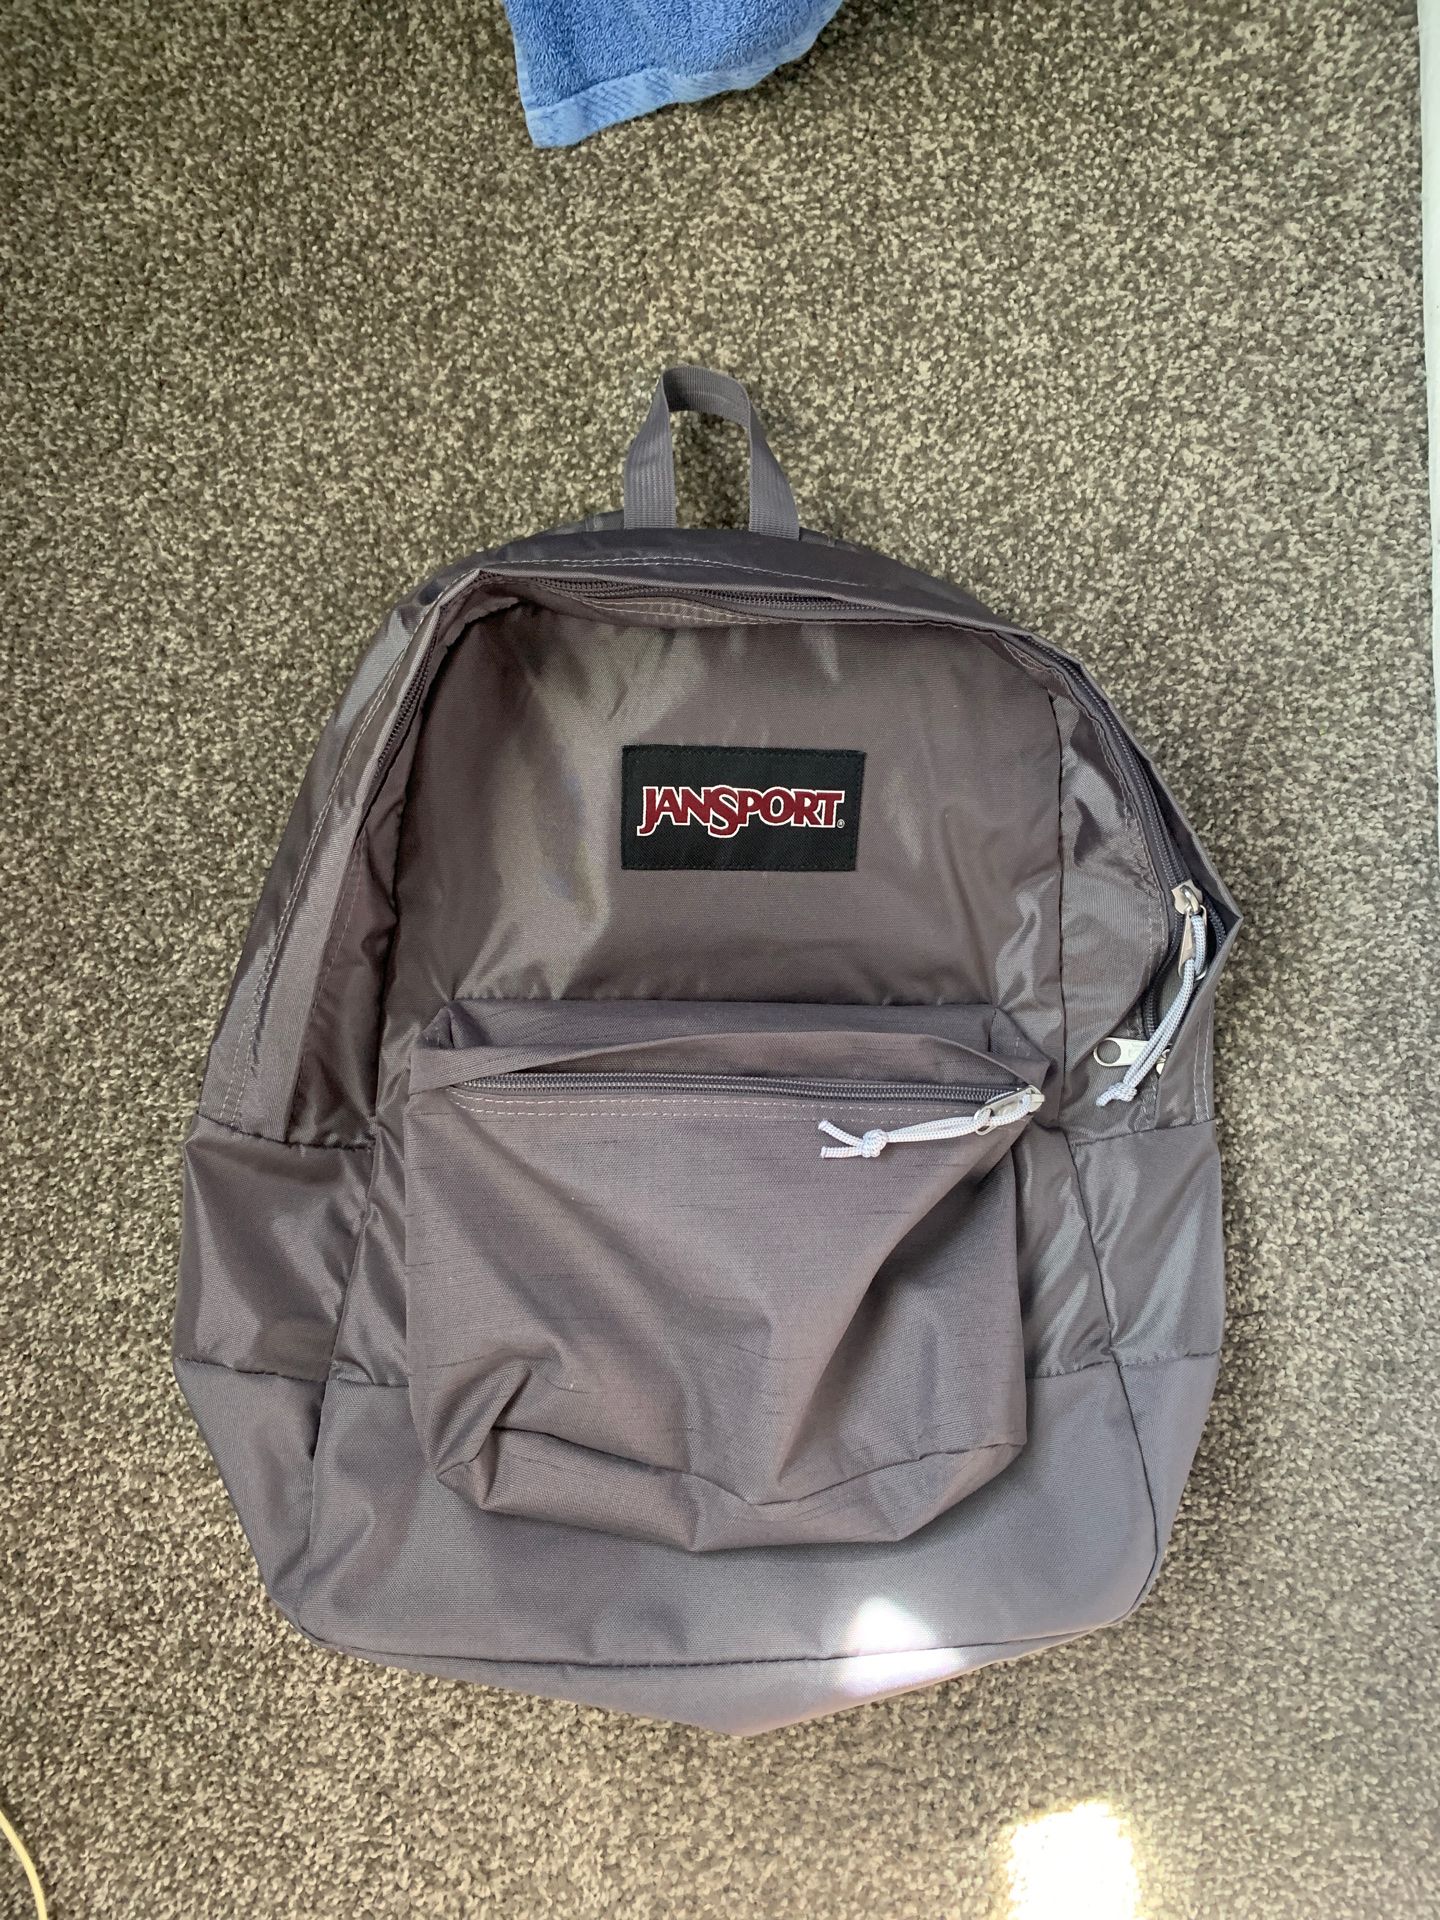 Brand new jansport backpack small bag book bag